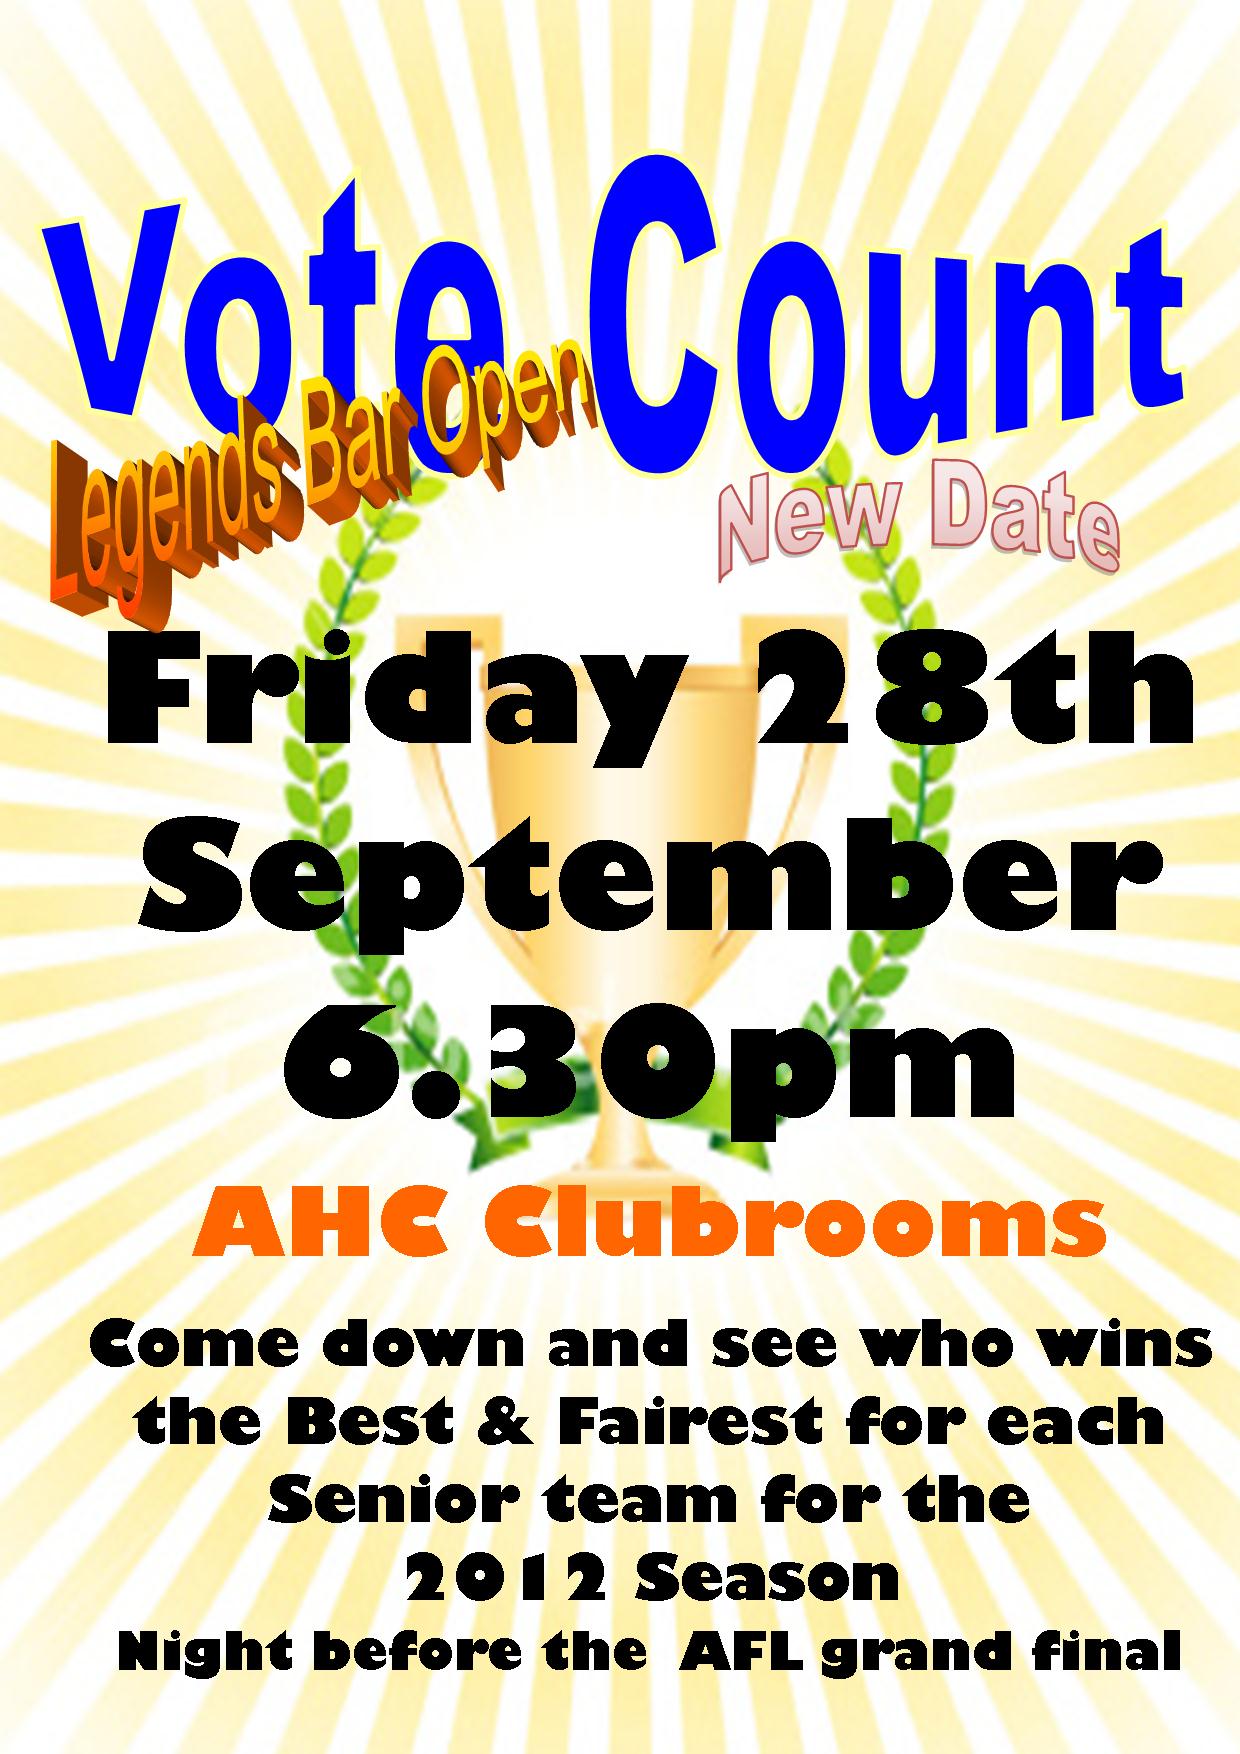 Vote Count